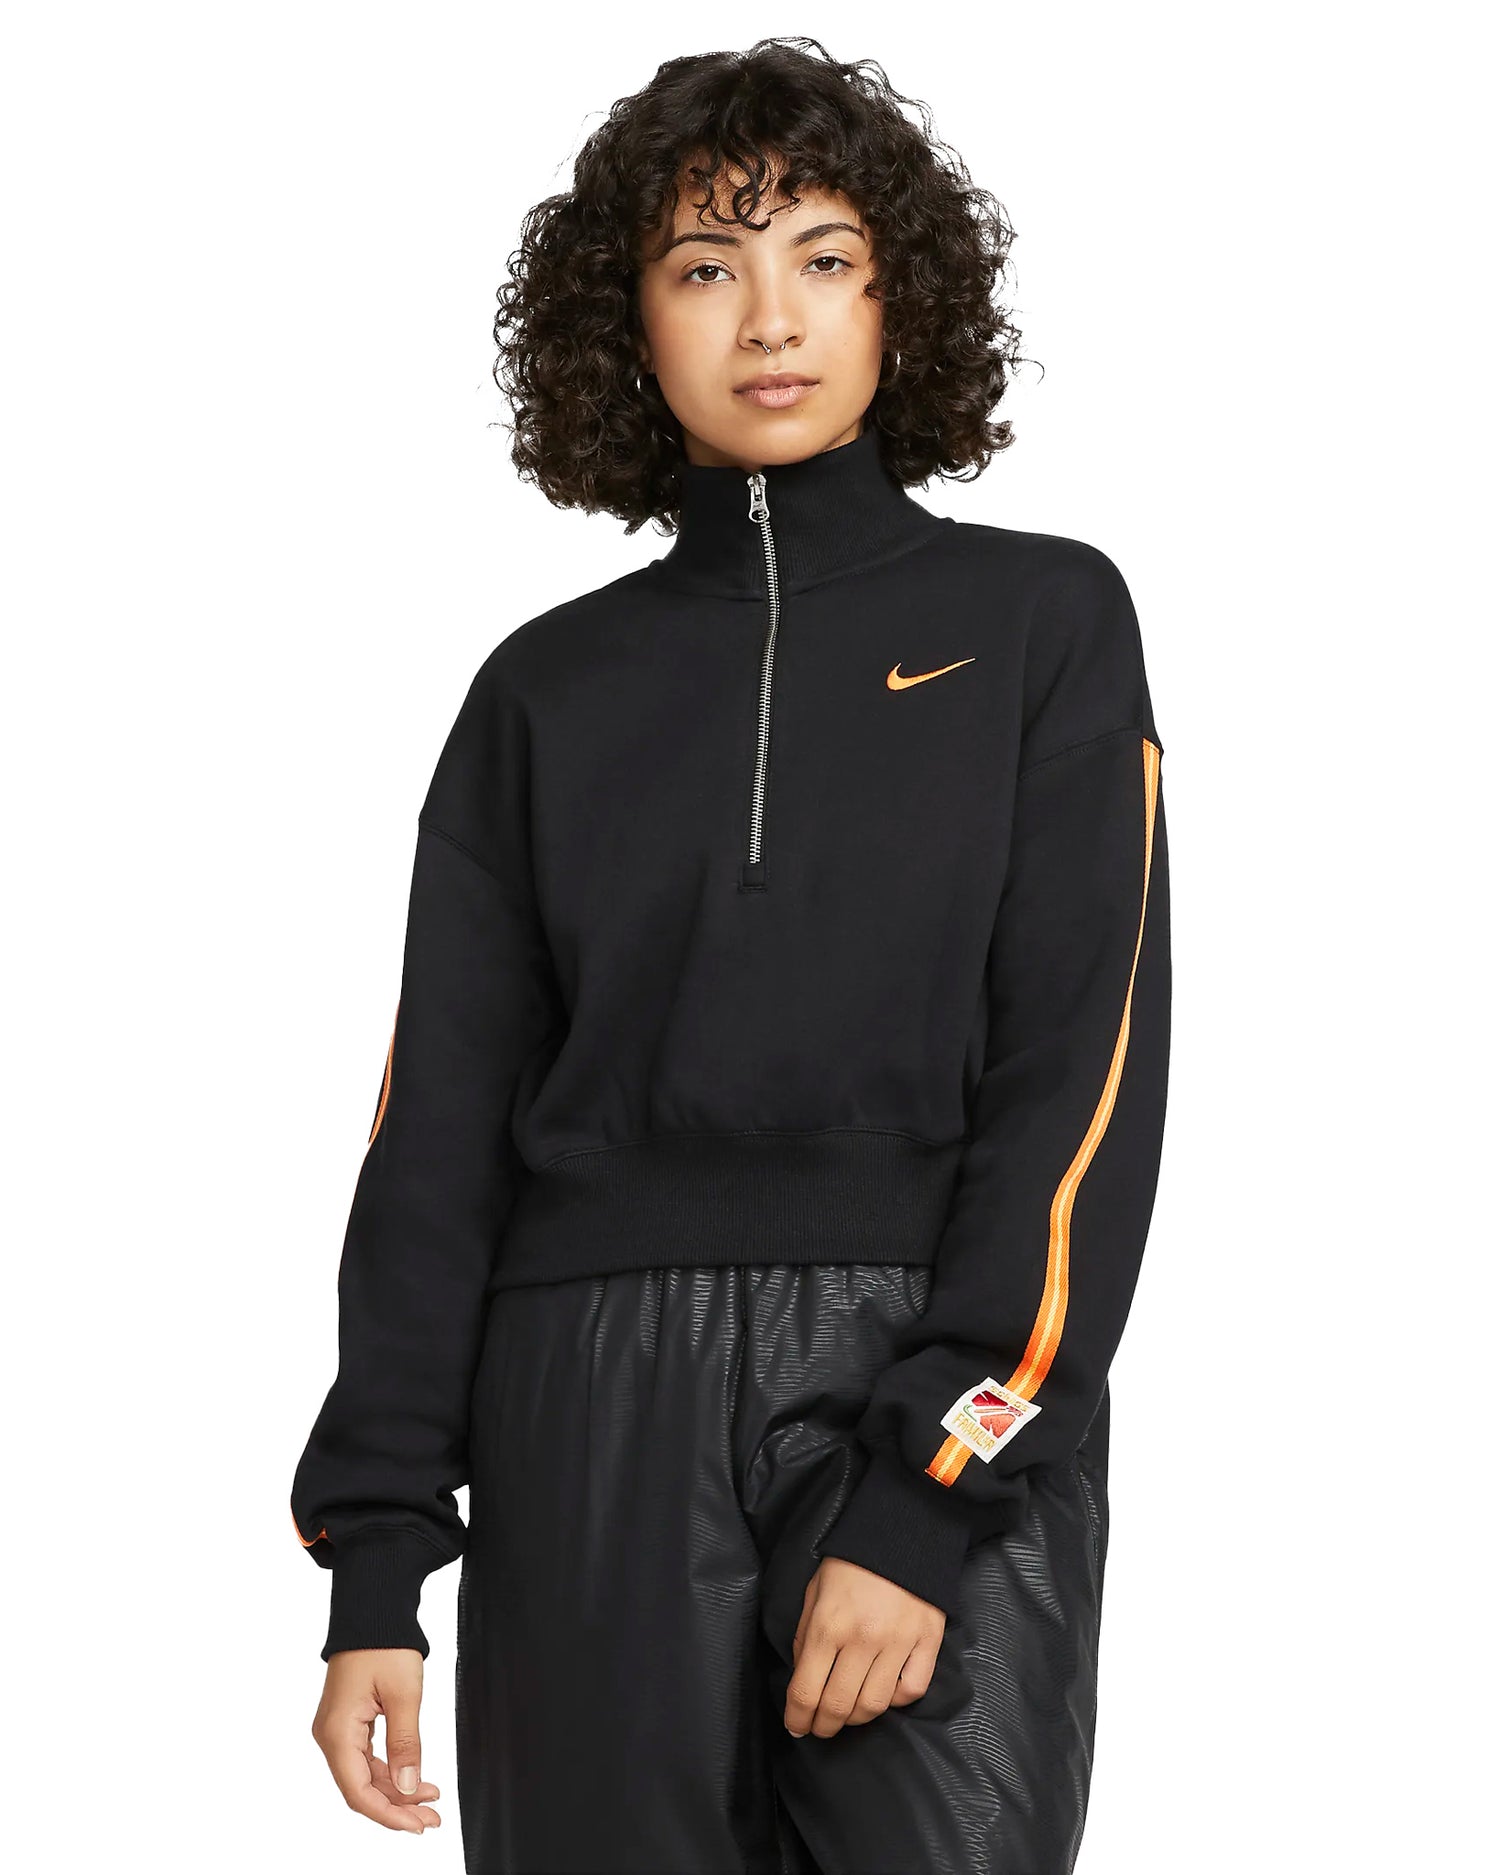 Nike Sportswear Somos Familia Cropped Sweatshirt "Black"